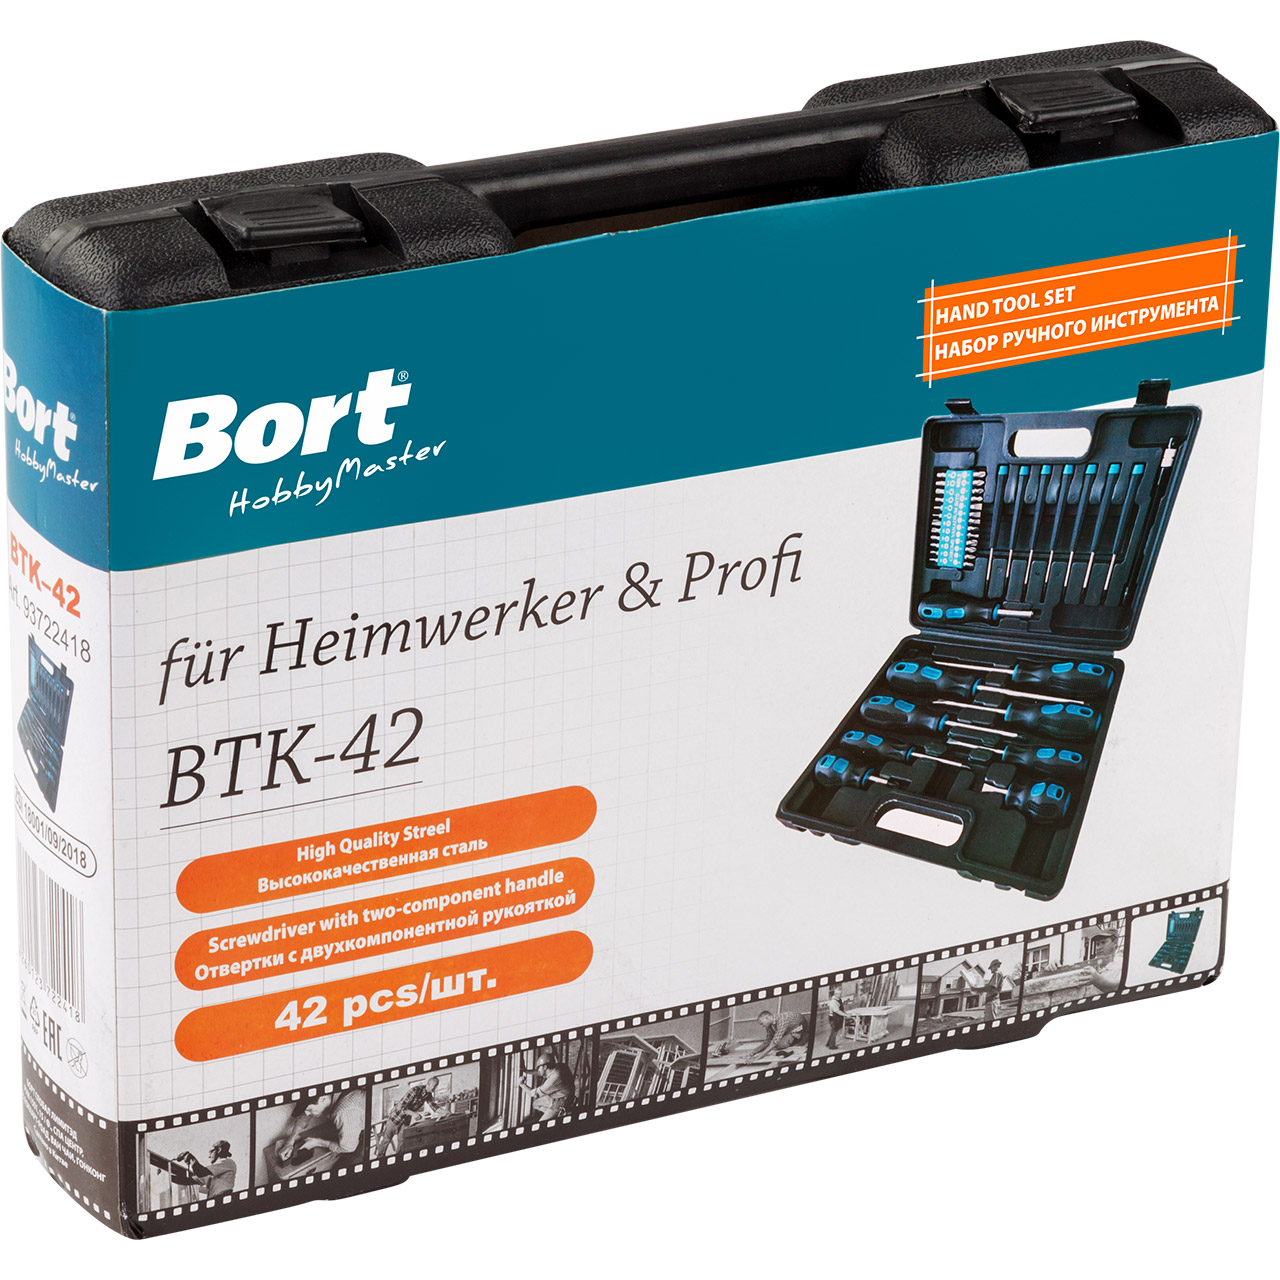 Hand tool set BORT BTK-42